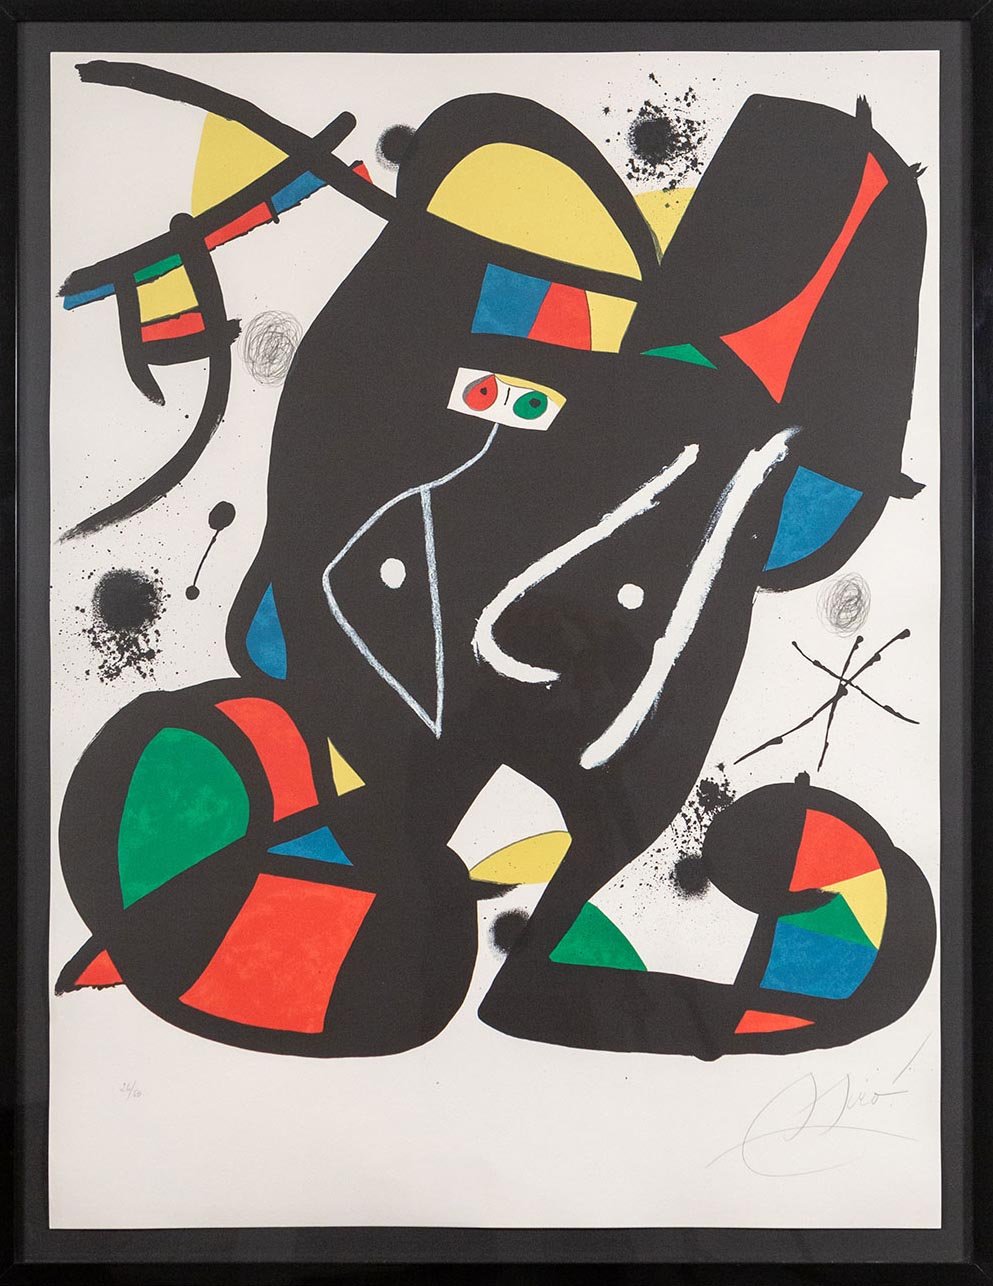  Joan Miro,  Colpir Sense Nafrar III , 1981, Lithograph on Guarro wove paper, 37.5 x 28.5 inches (work). Edition of 50 